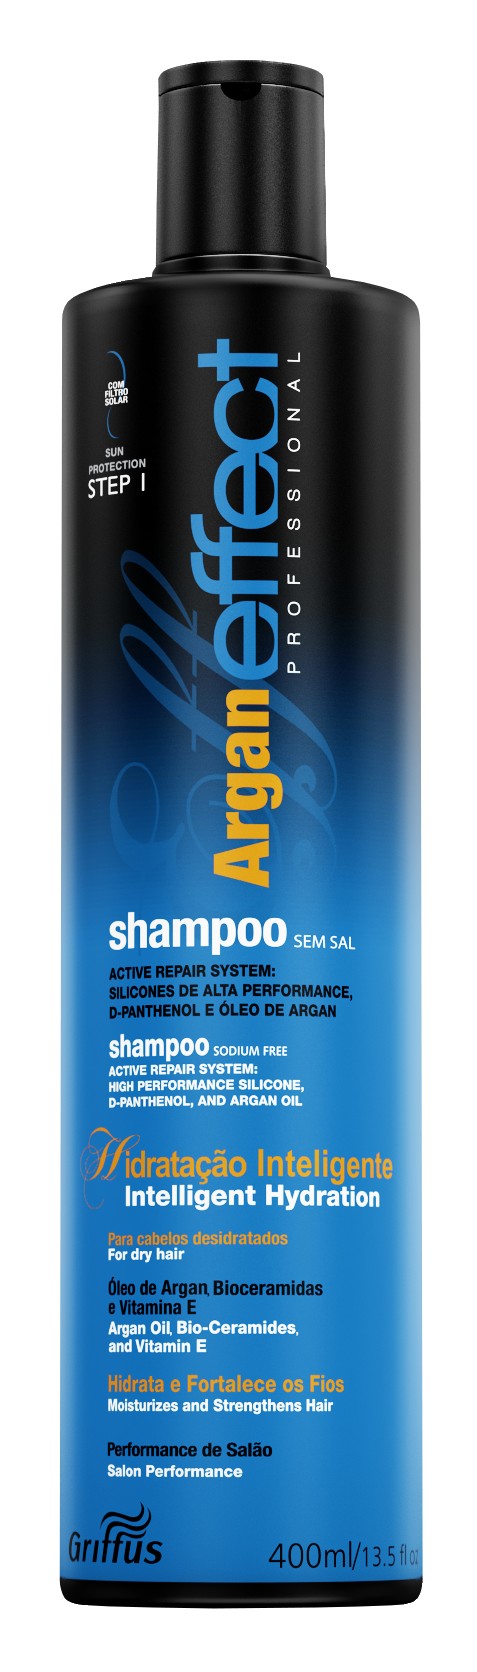 Griffus Argan Effect Damage Repair Shampoo